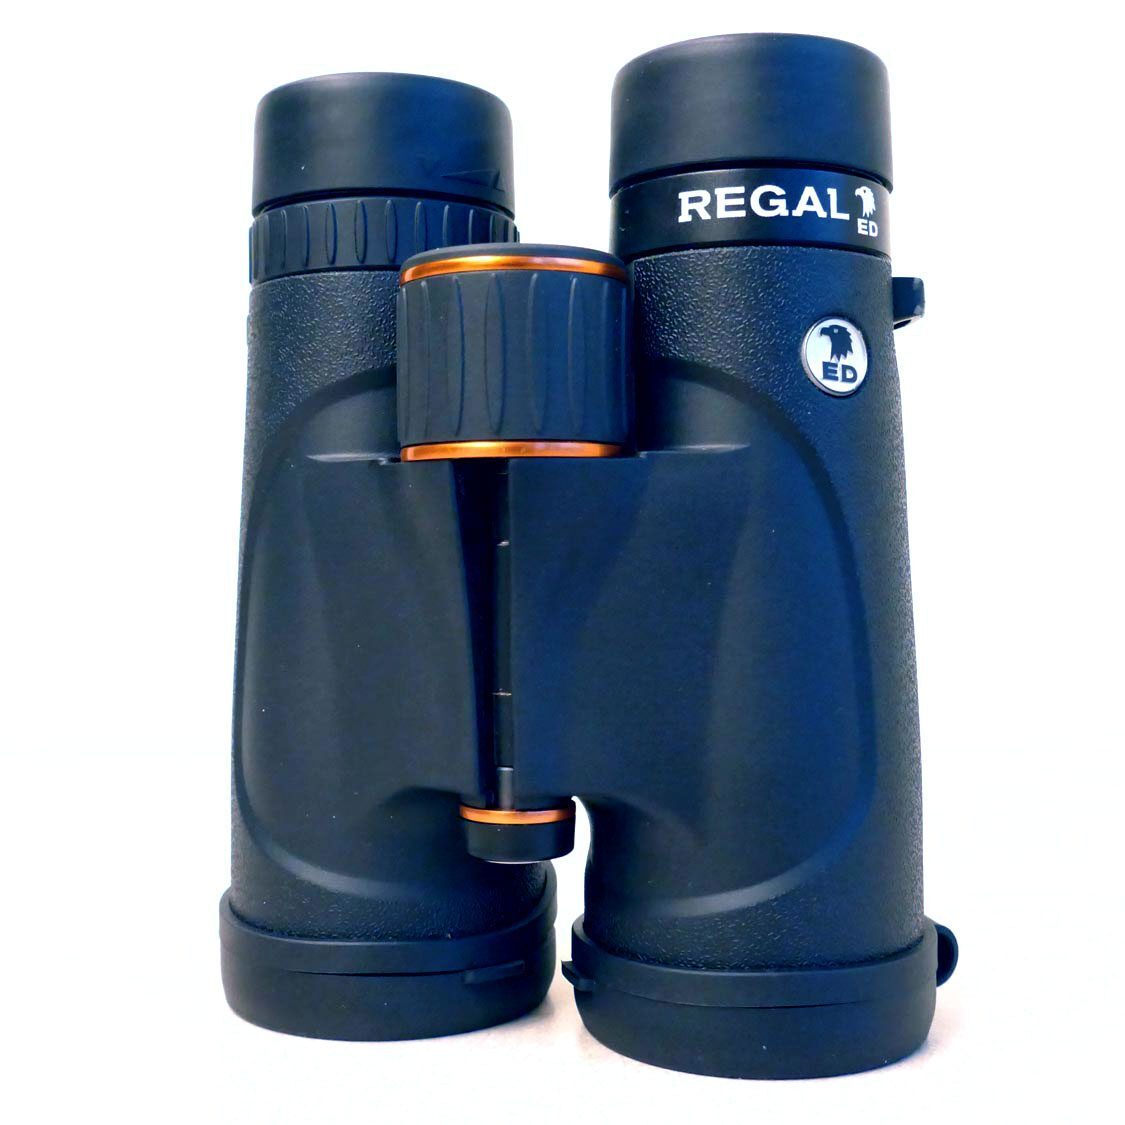 Celestron Regal ED 8�42 Binoculars: Our Review